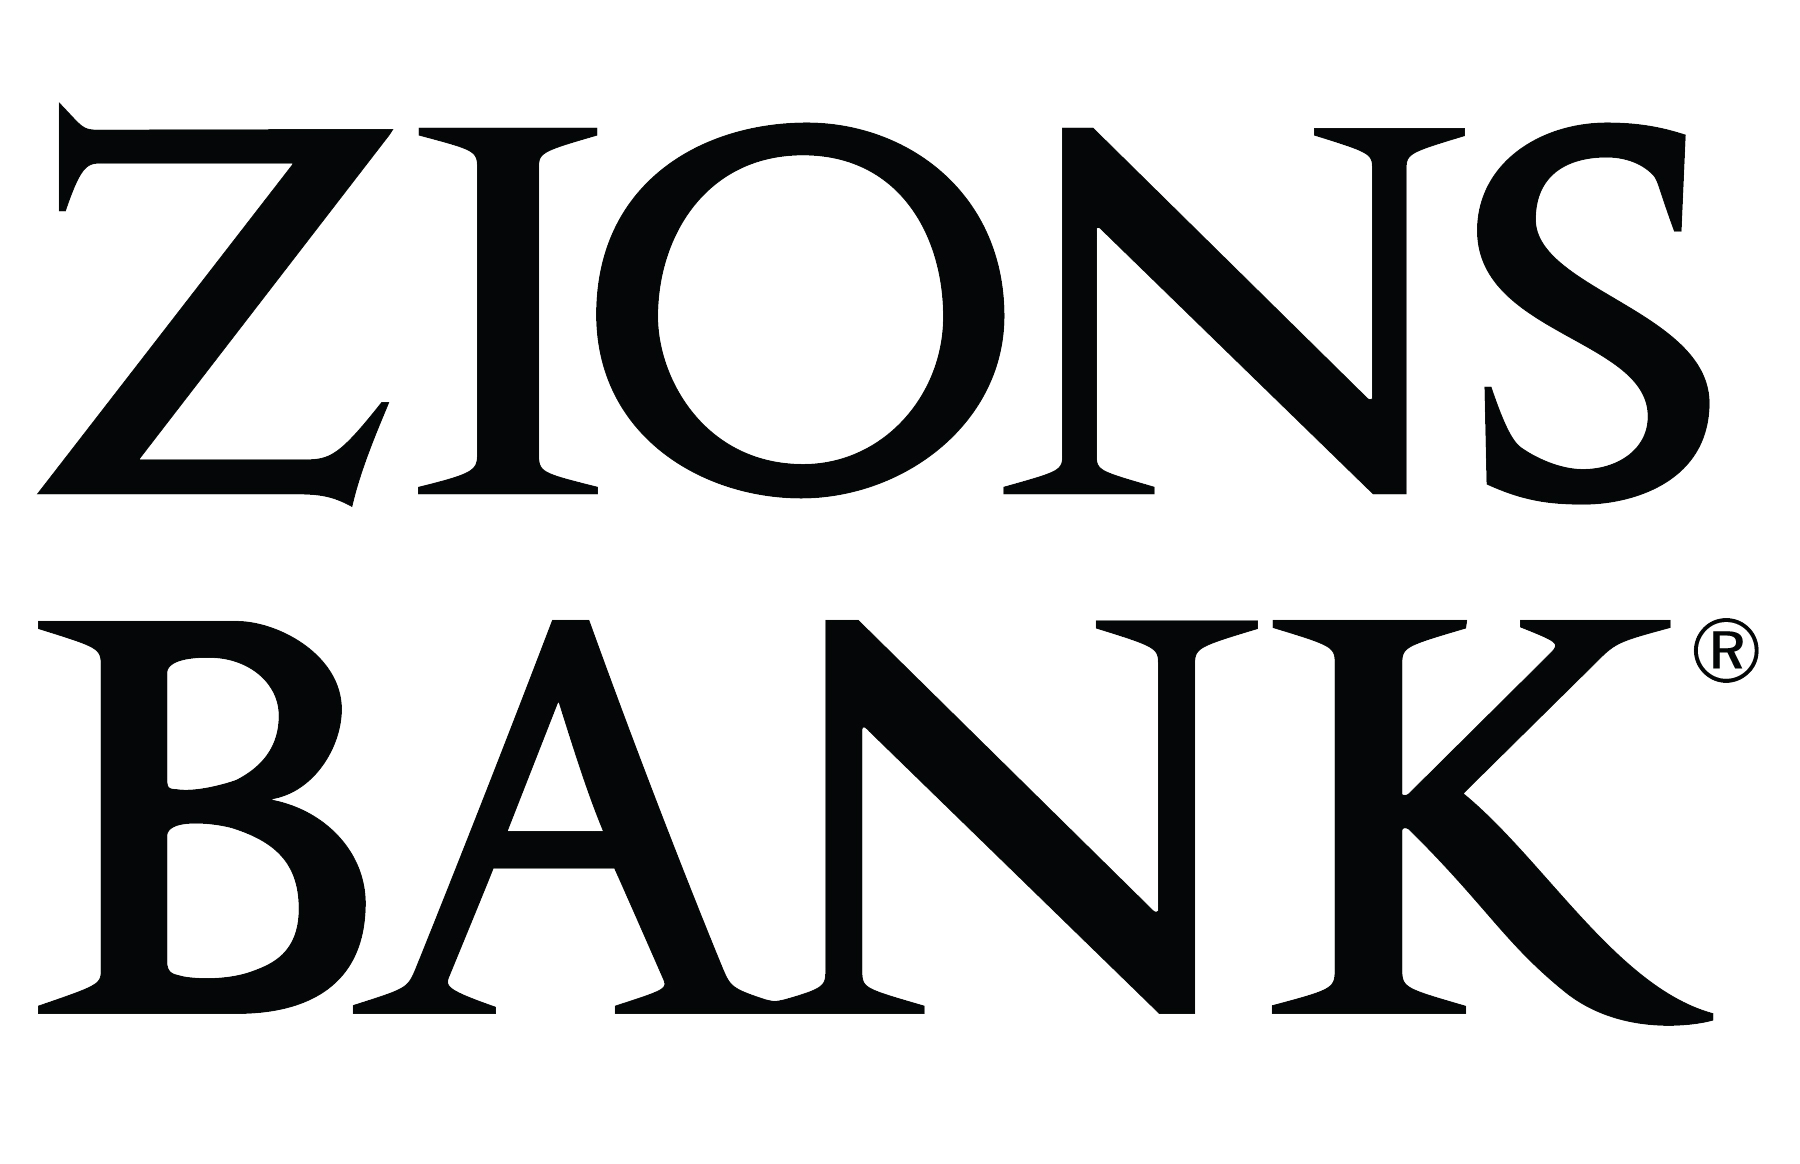 Zionsbank_logo copy.png